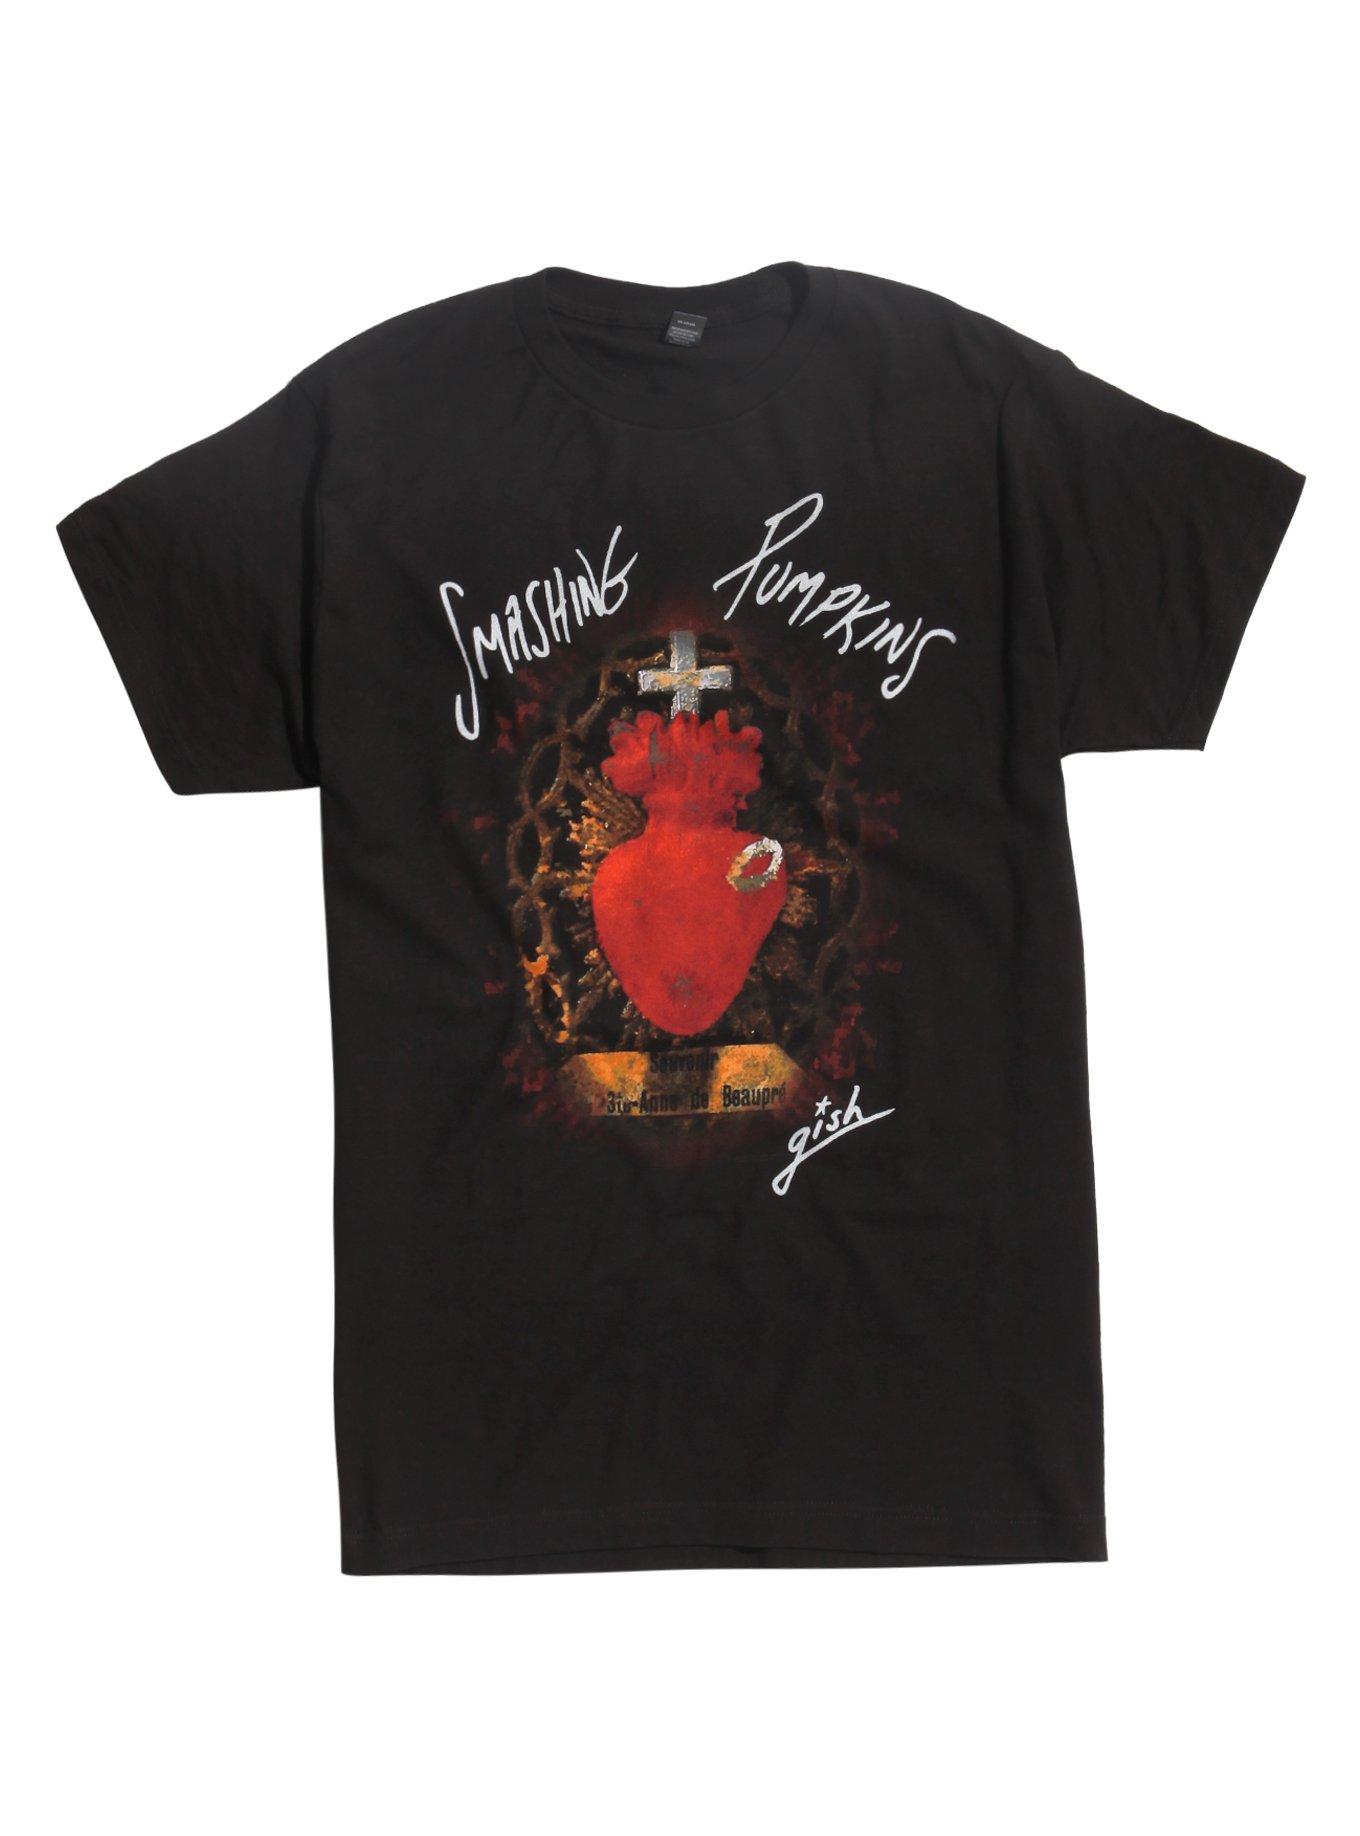 Smashing Pumpkins Gish Heart T-Shirt, BLACK, hi-res